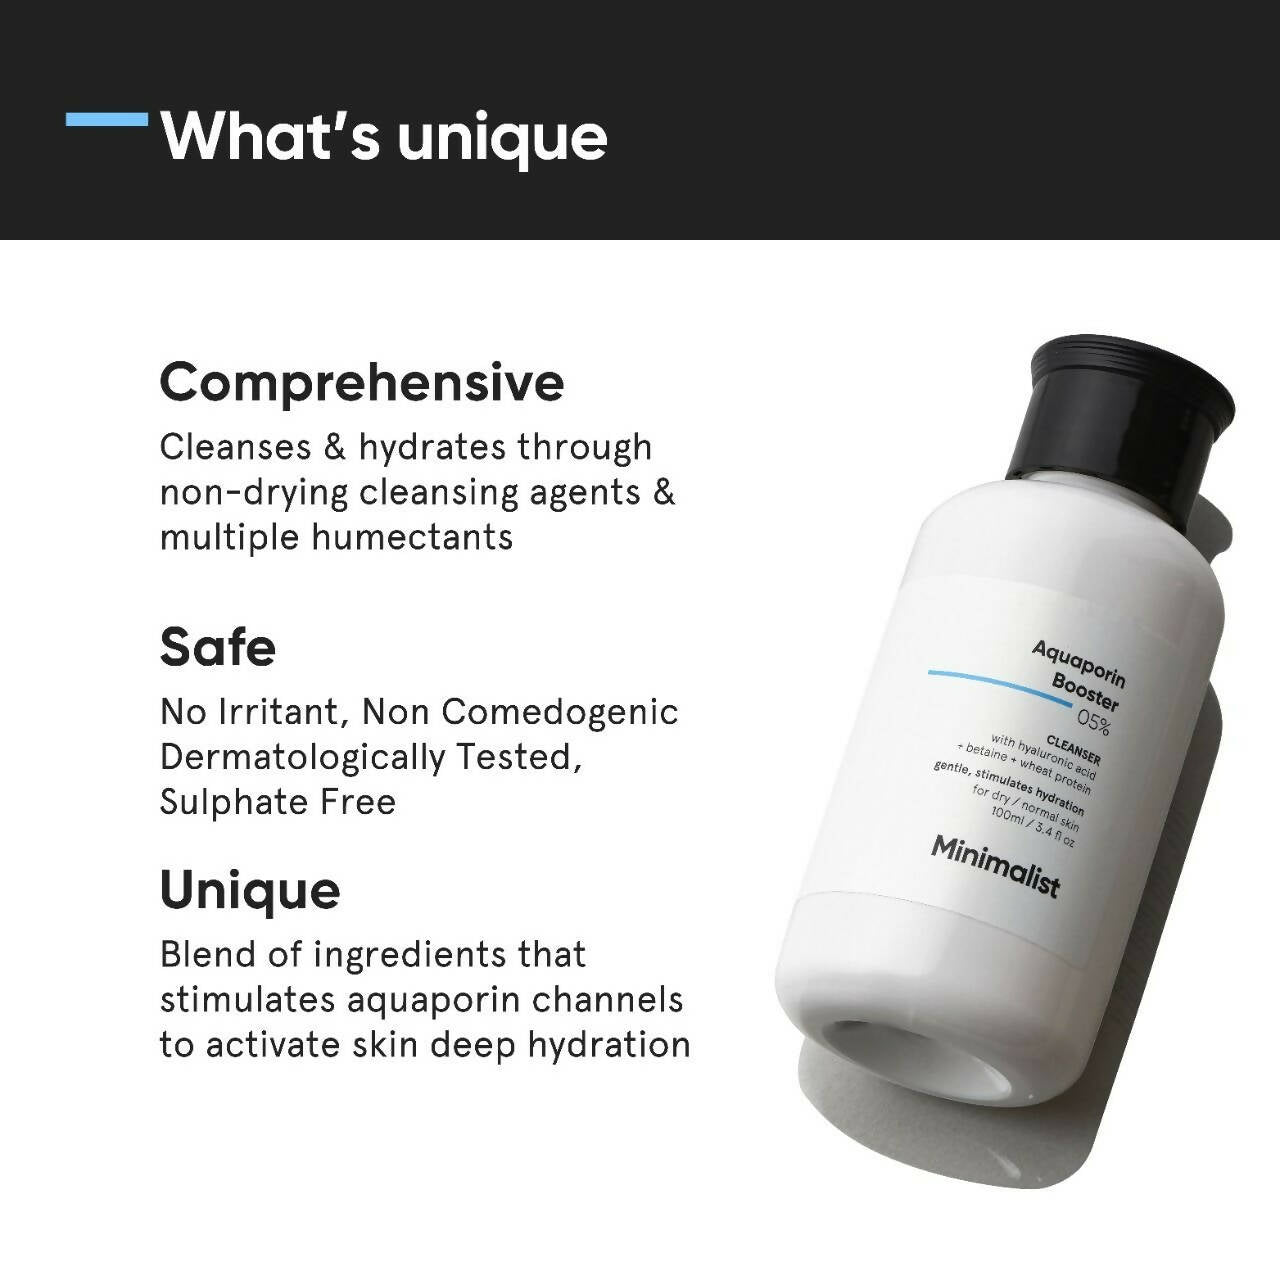 Minimalist Aquaporin Booster 05% Cleanser - Distacart